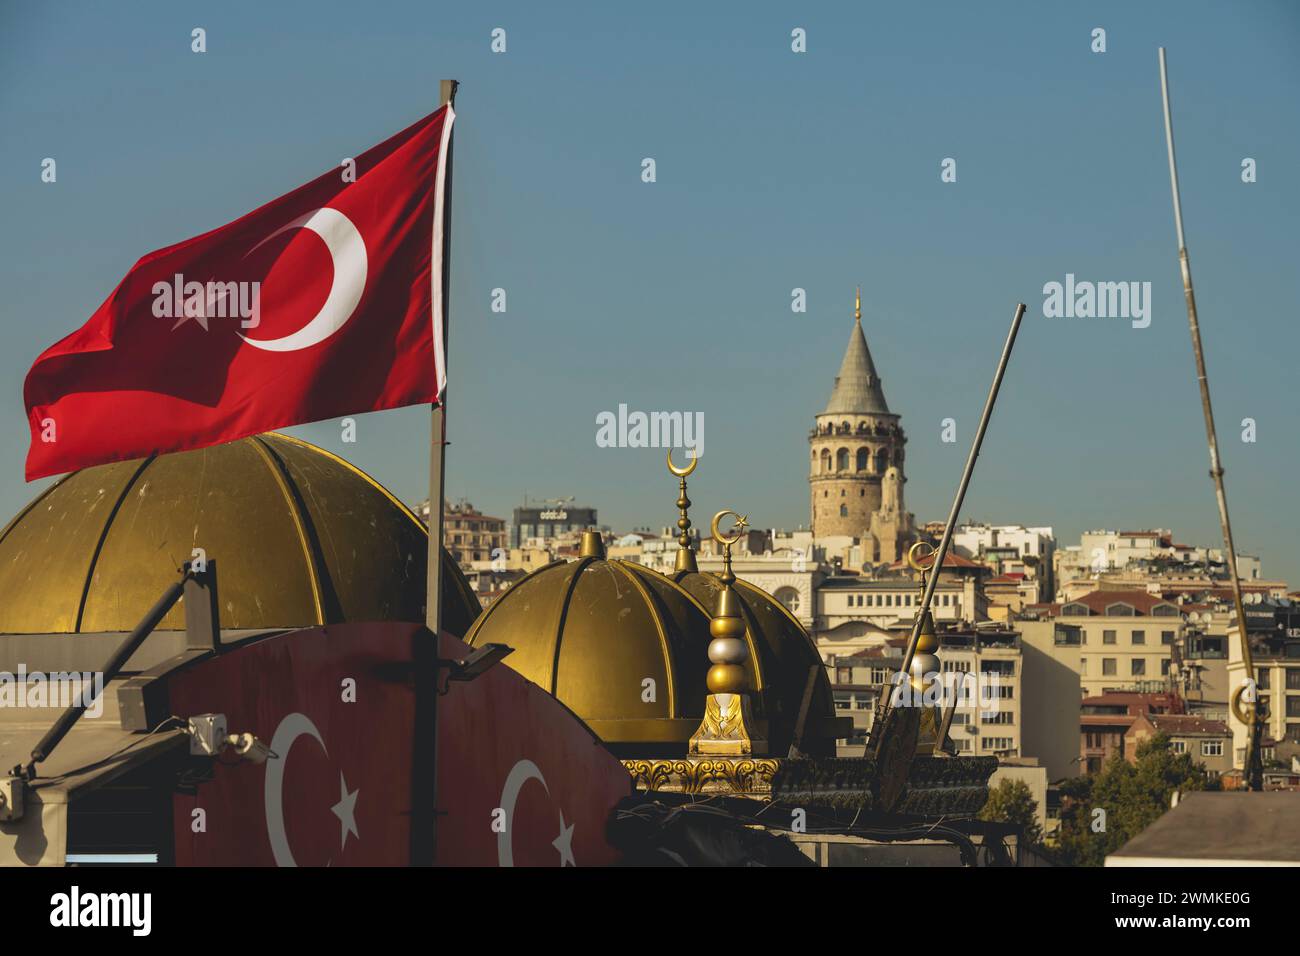 Galata Tower and the national flag of Turkey in Beyoglu; Istanbul, Turkey Stock Photo